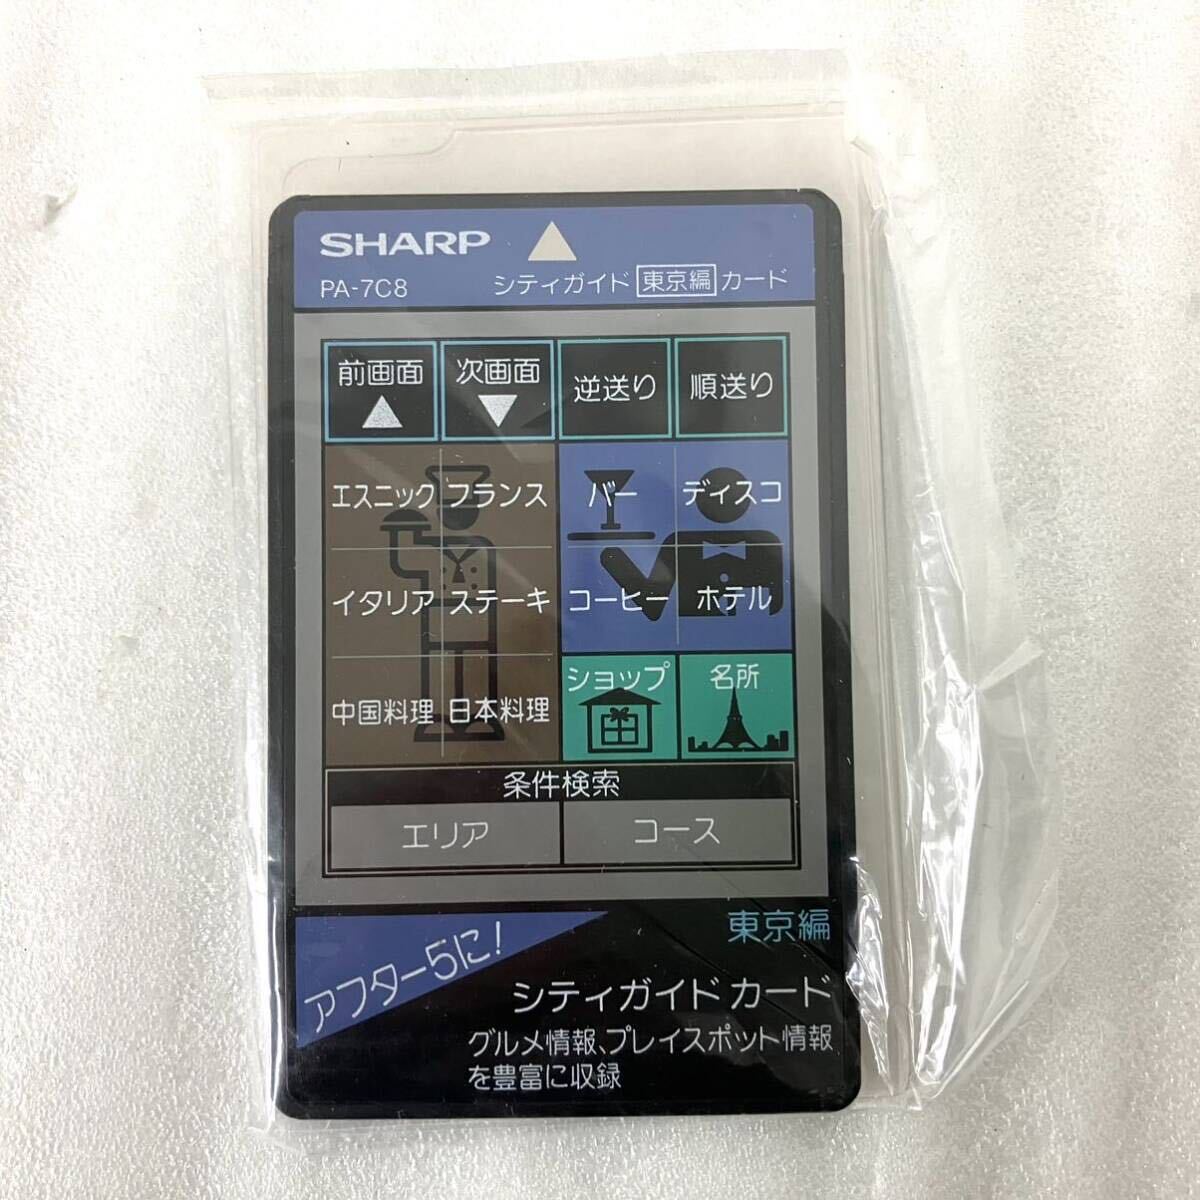  rare unused beautiful goods si Tiga ido card PA-7C8 Tokyo compilation SHARP sharp electron personal organiser PA-7000 exclusive use Showa era Heisei era retro consumer electronics after 5.!